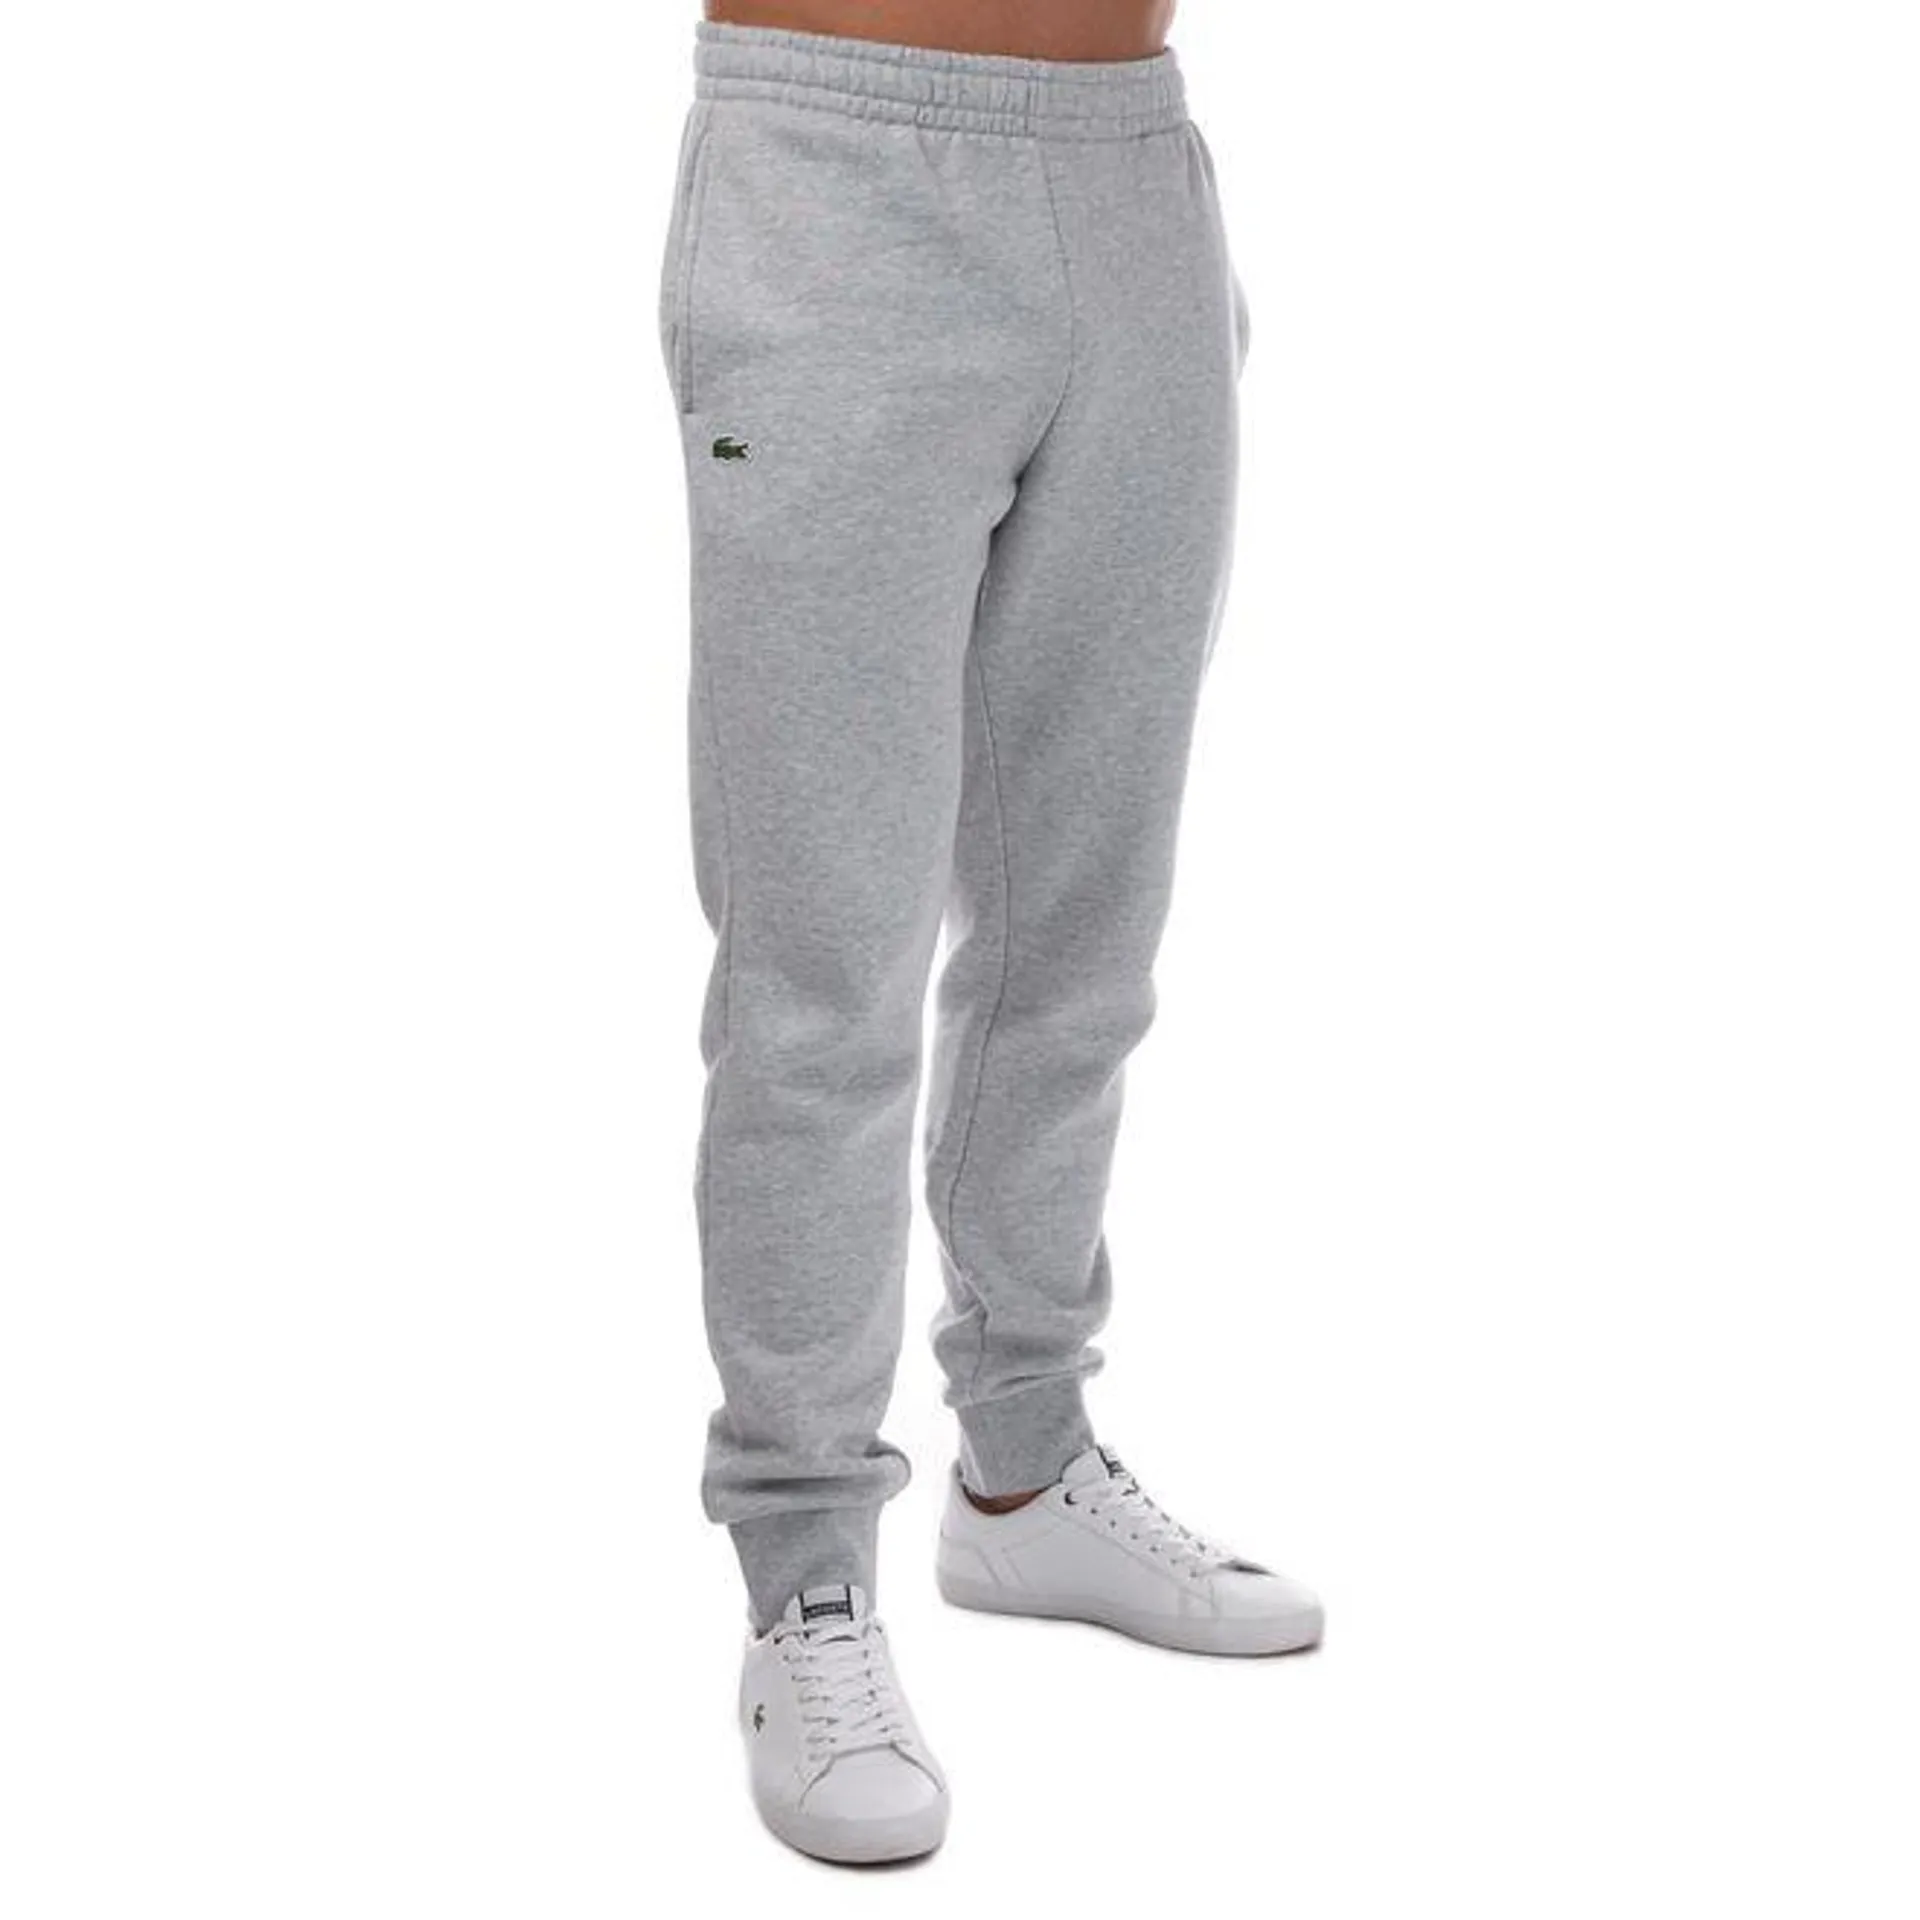 Lacoste Mens Sport Cotton Fleece Tennis Jog Pants in Grey